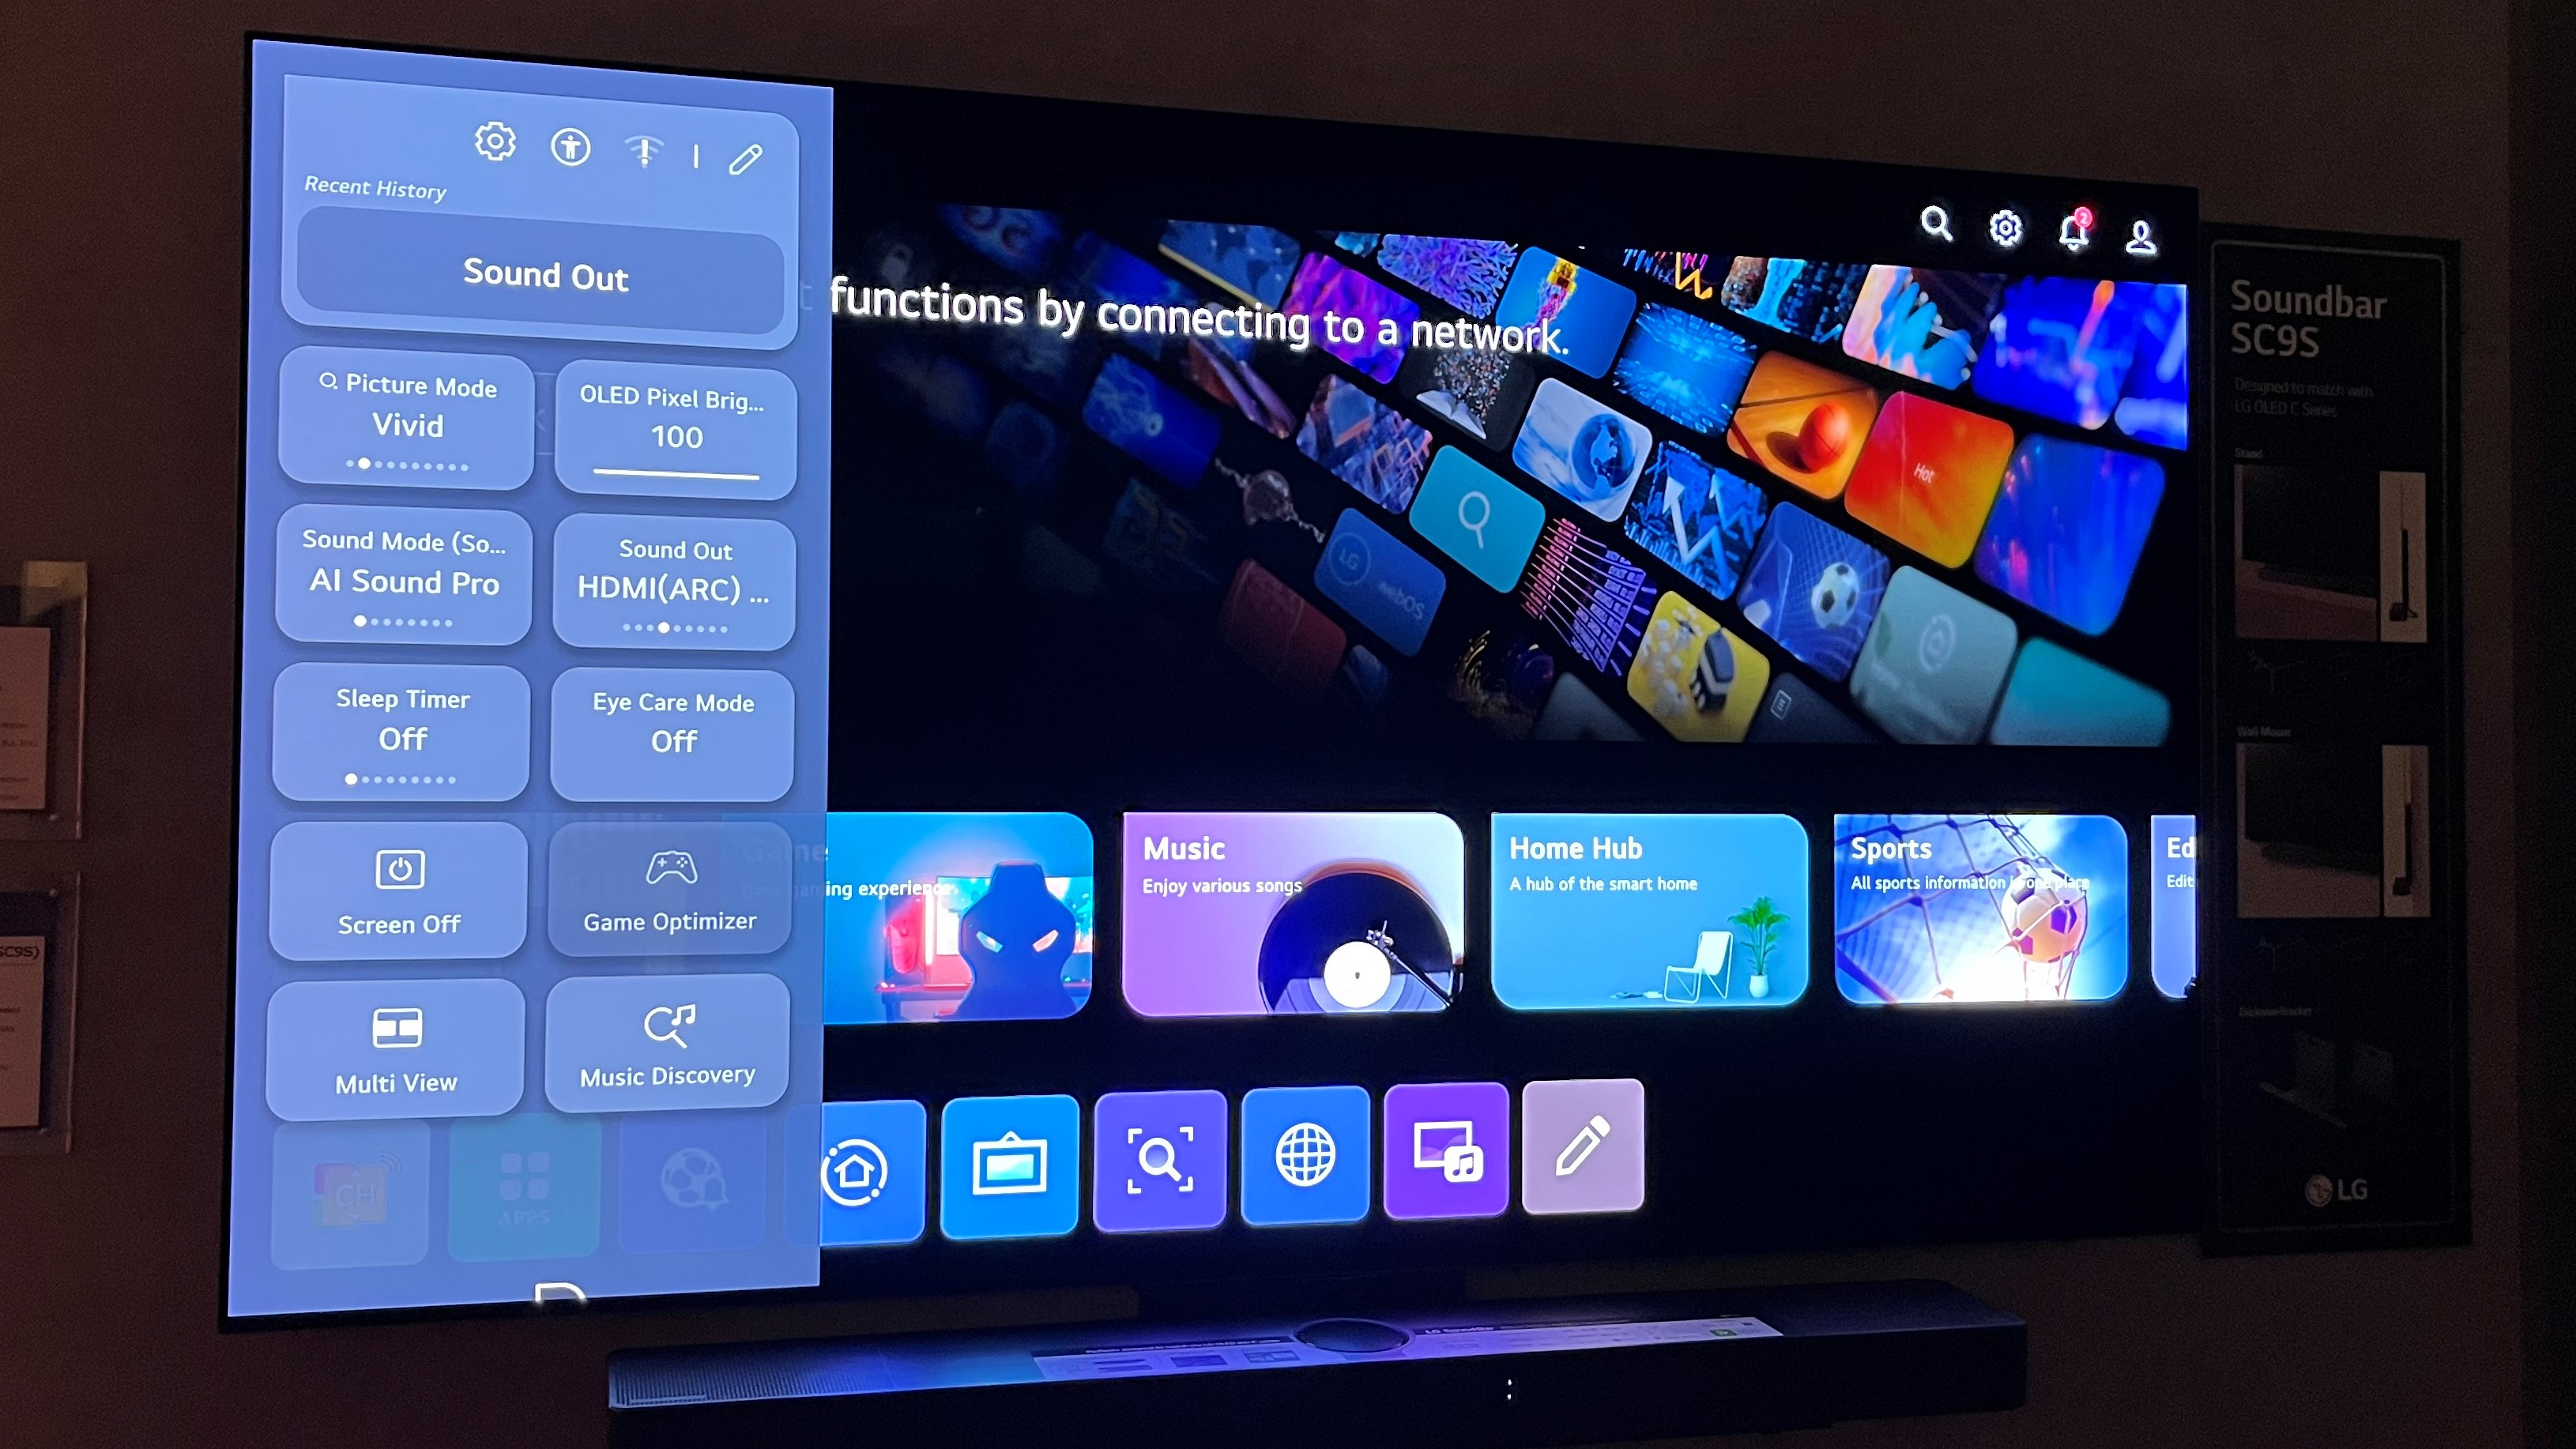 LG OLED TV smort onscreen interface showing new Quick Settings menu